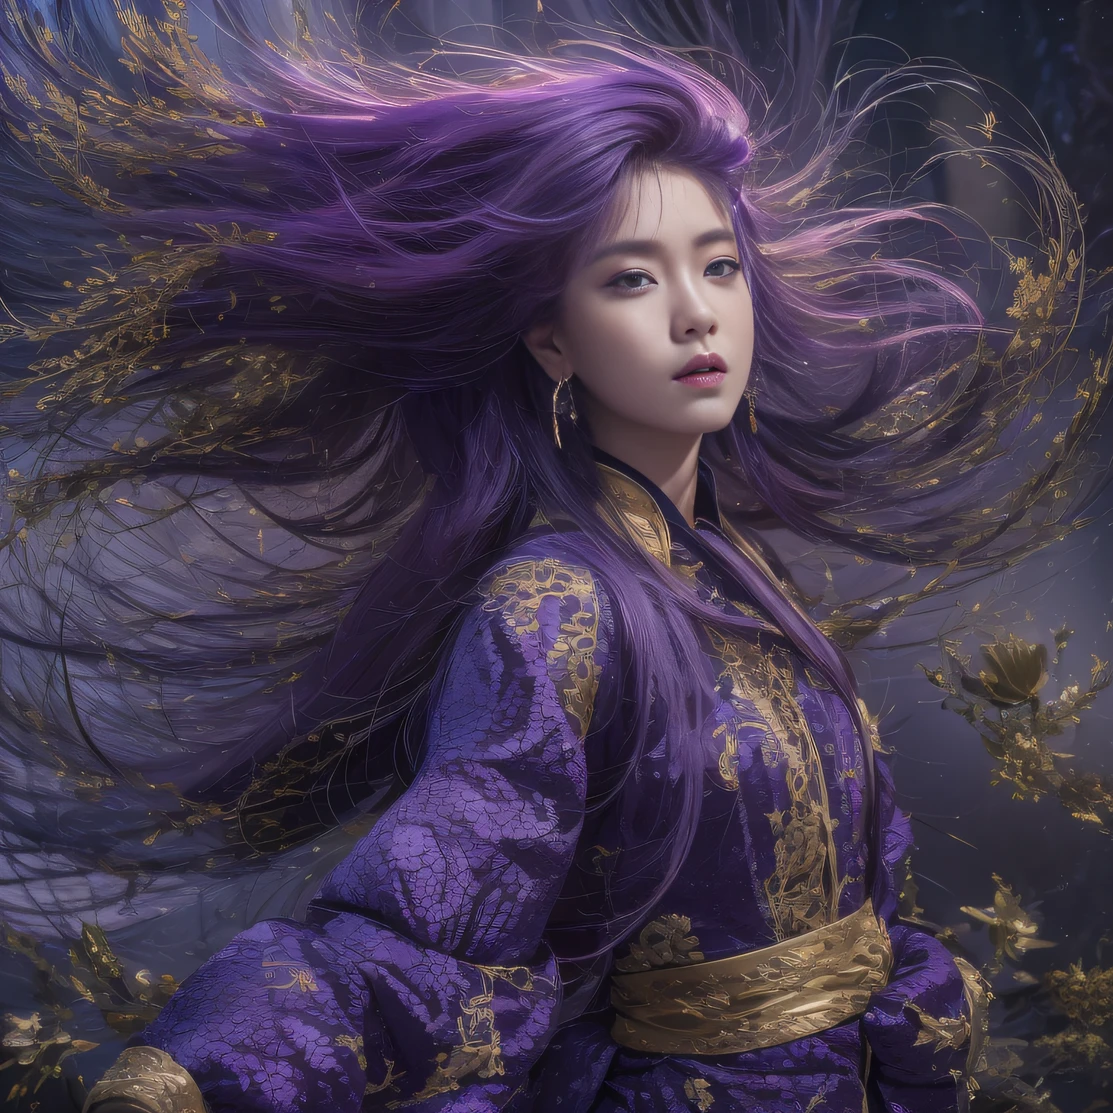 Agate glass texture 32k（傑作，高畫質，超高畫質，32k）亮紫色長髮飄逸，秋天的池塘，盛开， 一种颜色， 亚洲人 （女儿）， （红领巾）， 战斗姿态， 看着地面， 長白髮， 漂浮的亮紫色， 火雲紋金色頭飾， 中國長袖金絲服裝， （抽象墨水飞溅：1.2）， 白色背景，蓮花護法（現實地：1.4），亮紫色的头发，路上冒煙，背景很純淨， 高解析度， 细节， RAW 照片， 夏普再保险， 尼康 D850 膠卷照片由 Jefferies Lee 拍攝 4 柯達 Portra 400 相機 F1.6 枪, 丰富的色彩, 超逼真生動的紋理, 戲劇性的燈光, 虛幻引擎藝術站趨勢, 西奈斯特800，亮紫色長髮飄逸